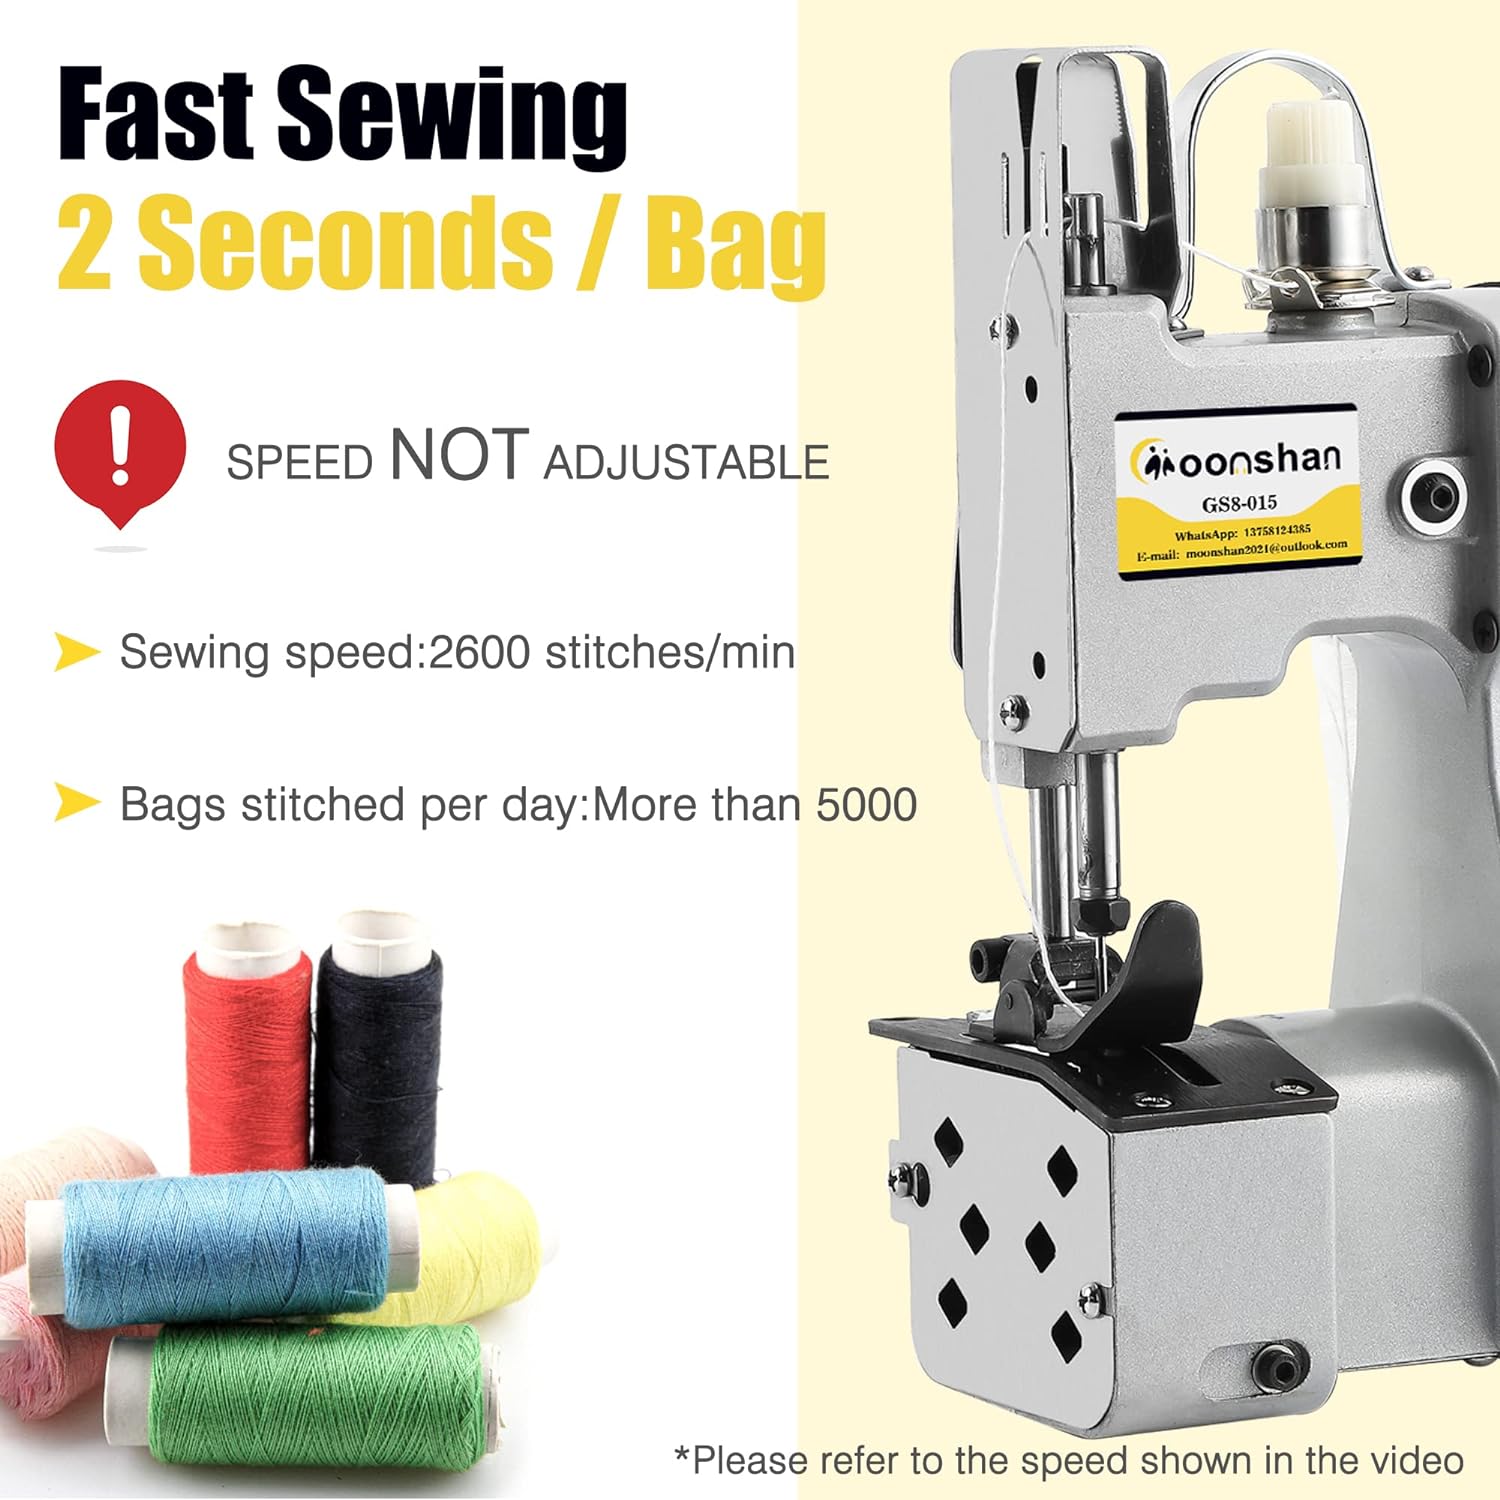 Ultrasonic Sewing Machine Manufacturers in India | Best Ultrasonic Sewing  Machine in India | Ultrasonic Sewing Machine at lowest price